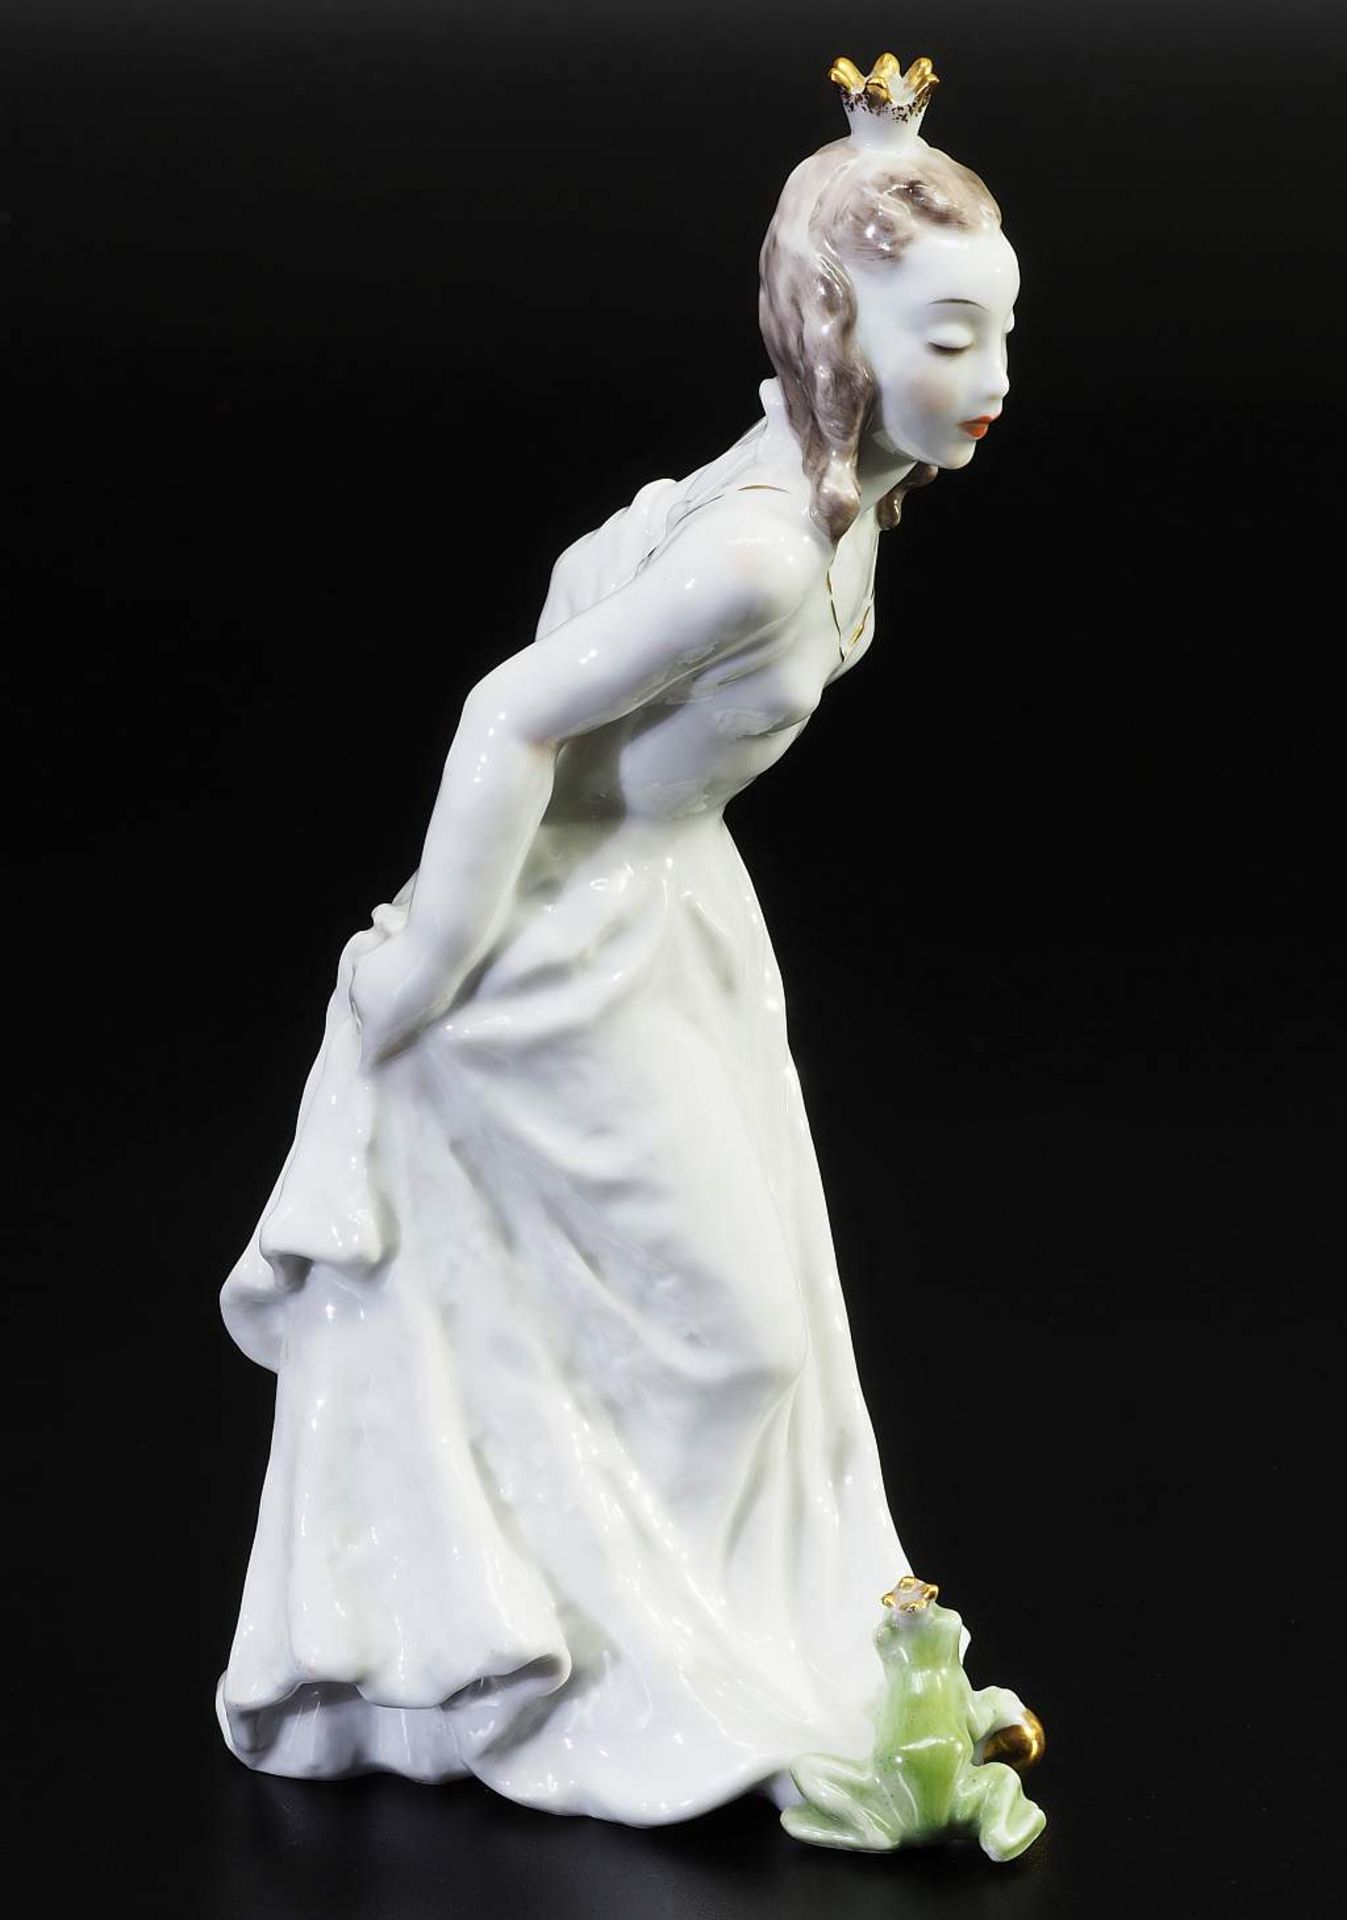 FRIEDRICH-GRONAU, Eleonore. Märchenfigur "Froschkönigin".FRIEDRICH-GRONAU, Eleonore. 1908 - Bild 3 aus 7